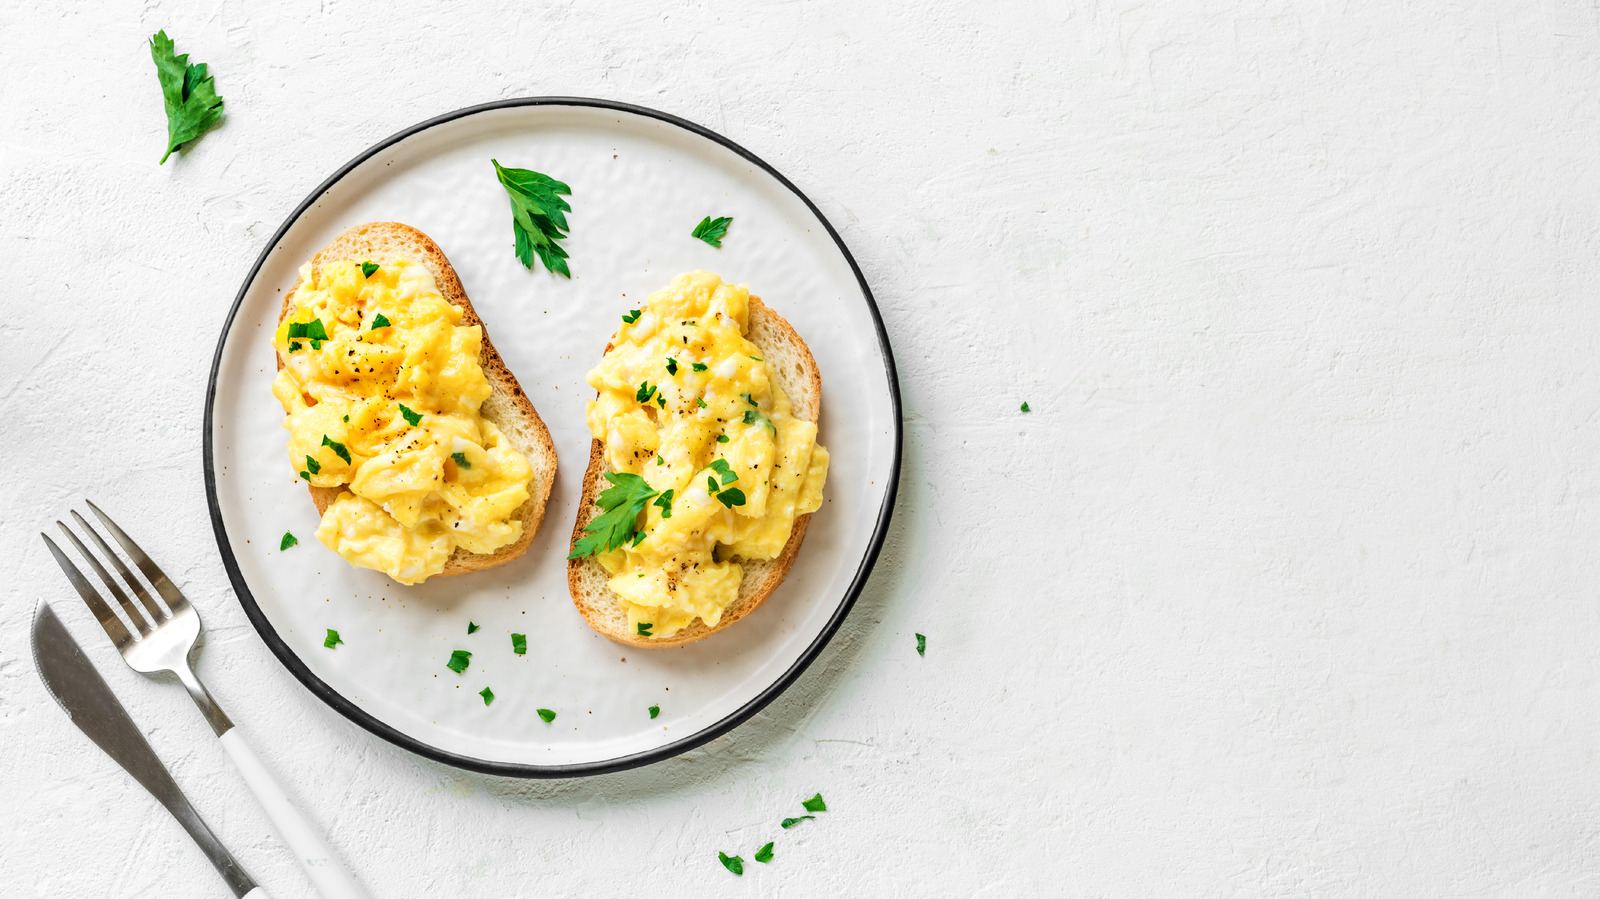 How to make scrambled eggs - The Washington Post